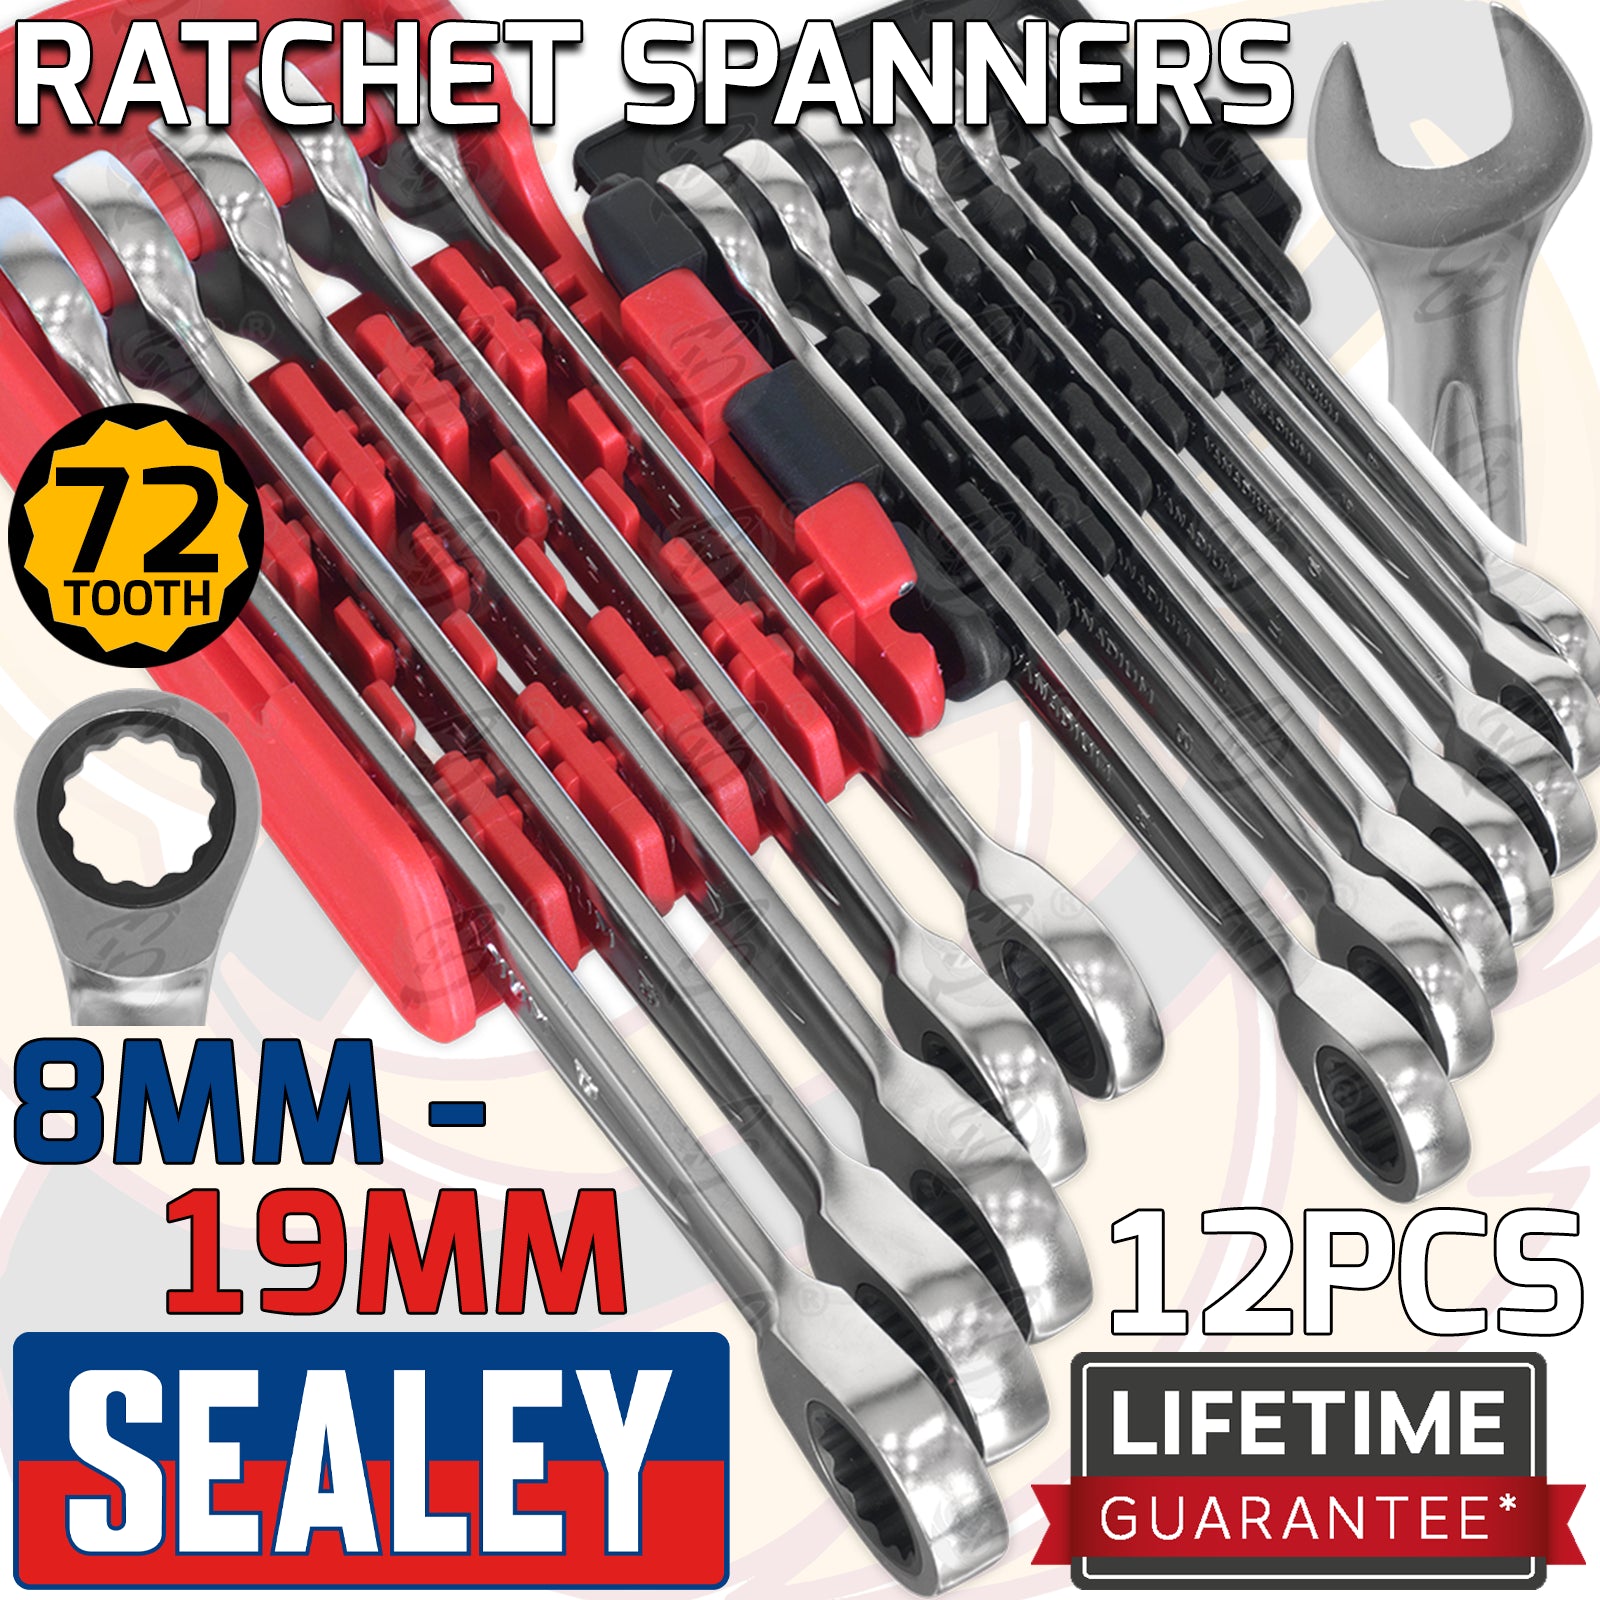 SEALEY 12PCS COMBINATION RATCHET SPANNER SET 8MM - 19MM